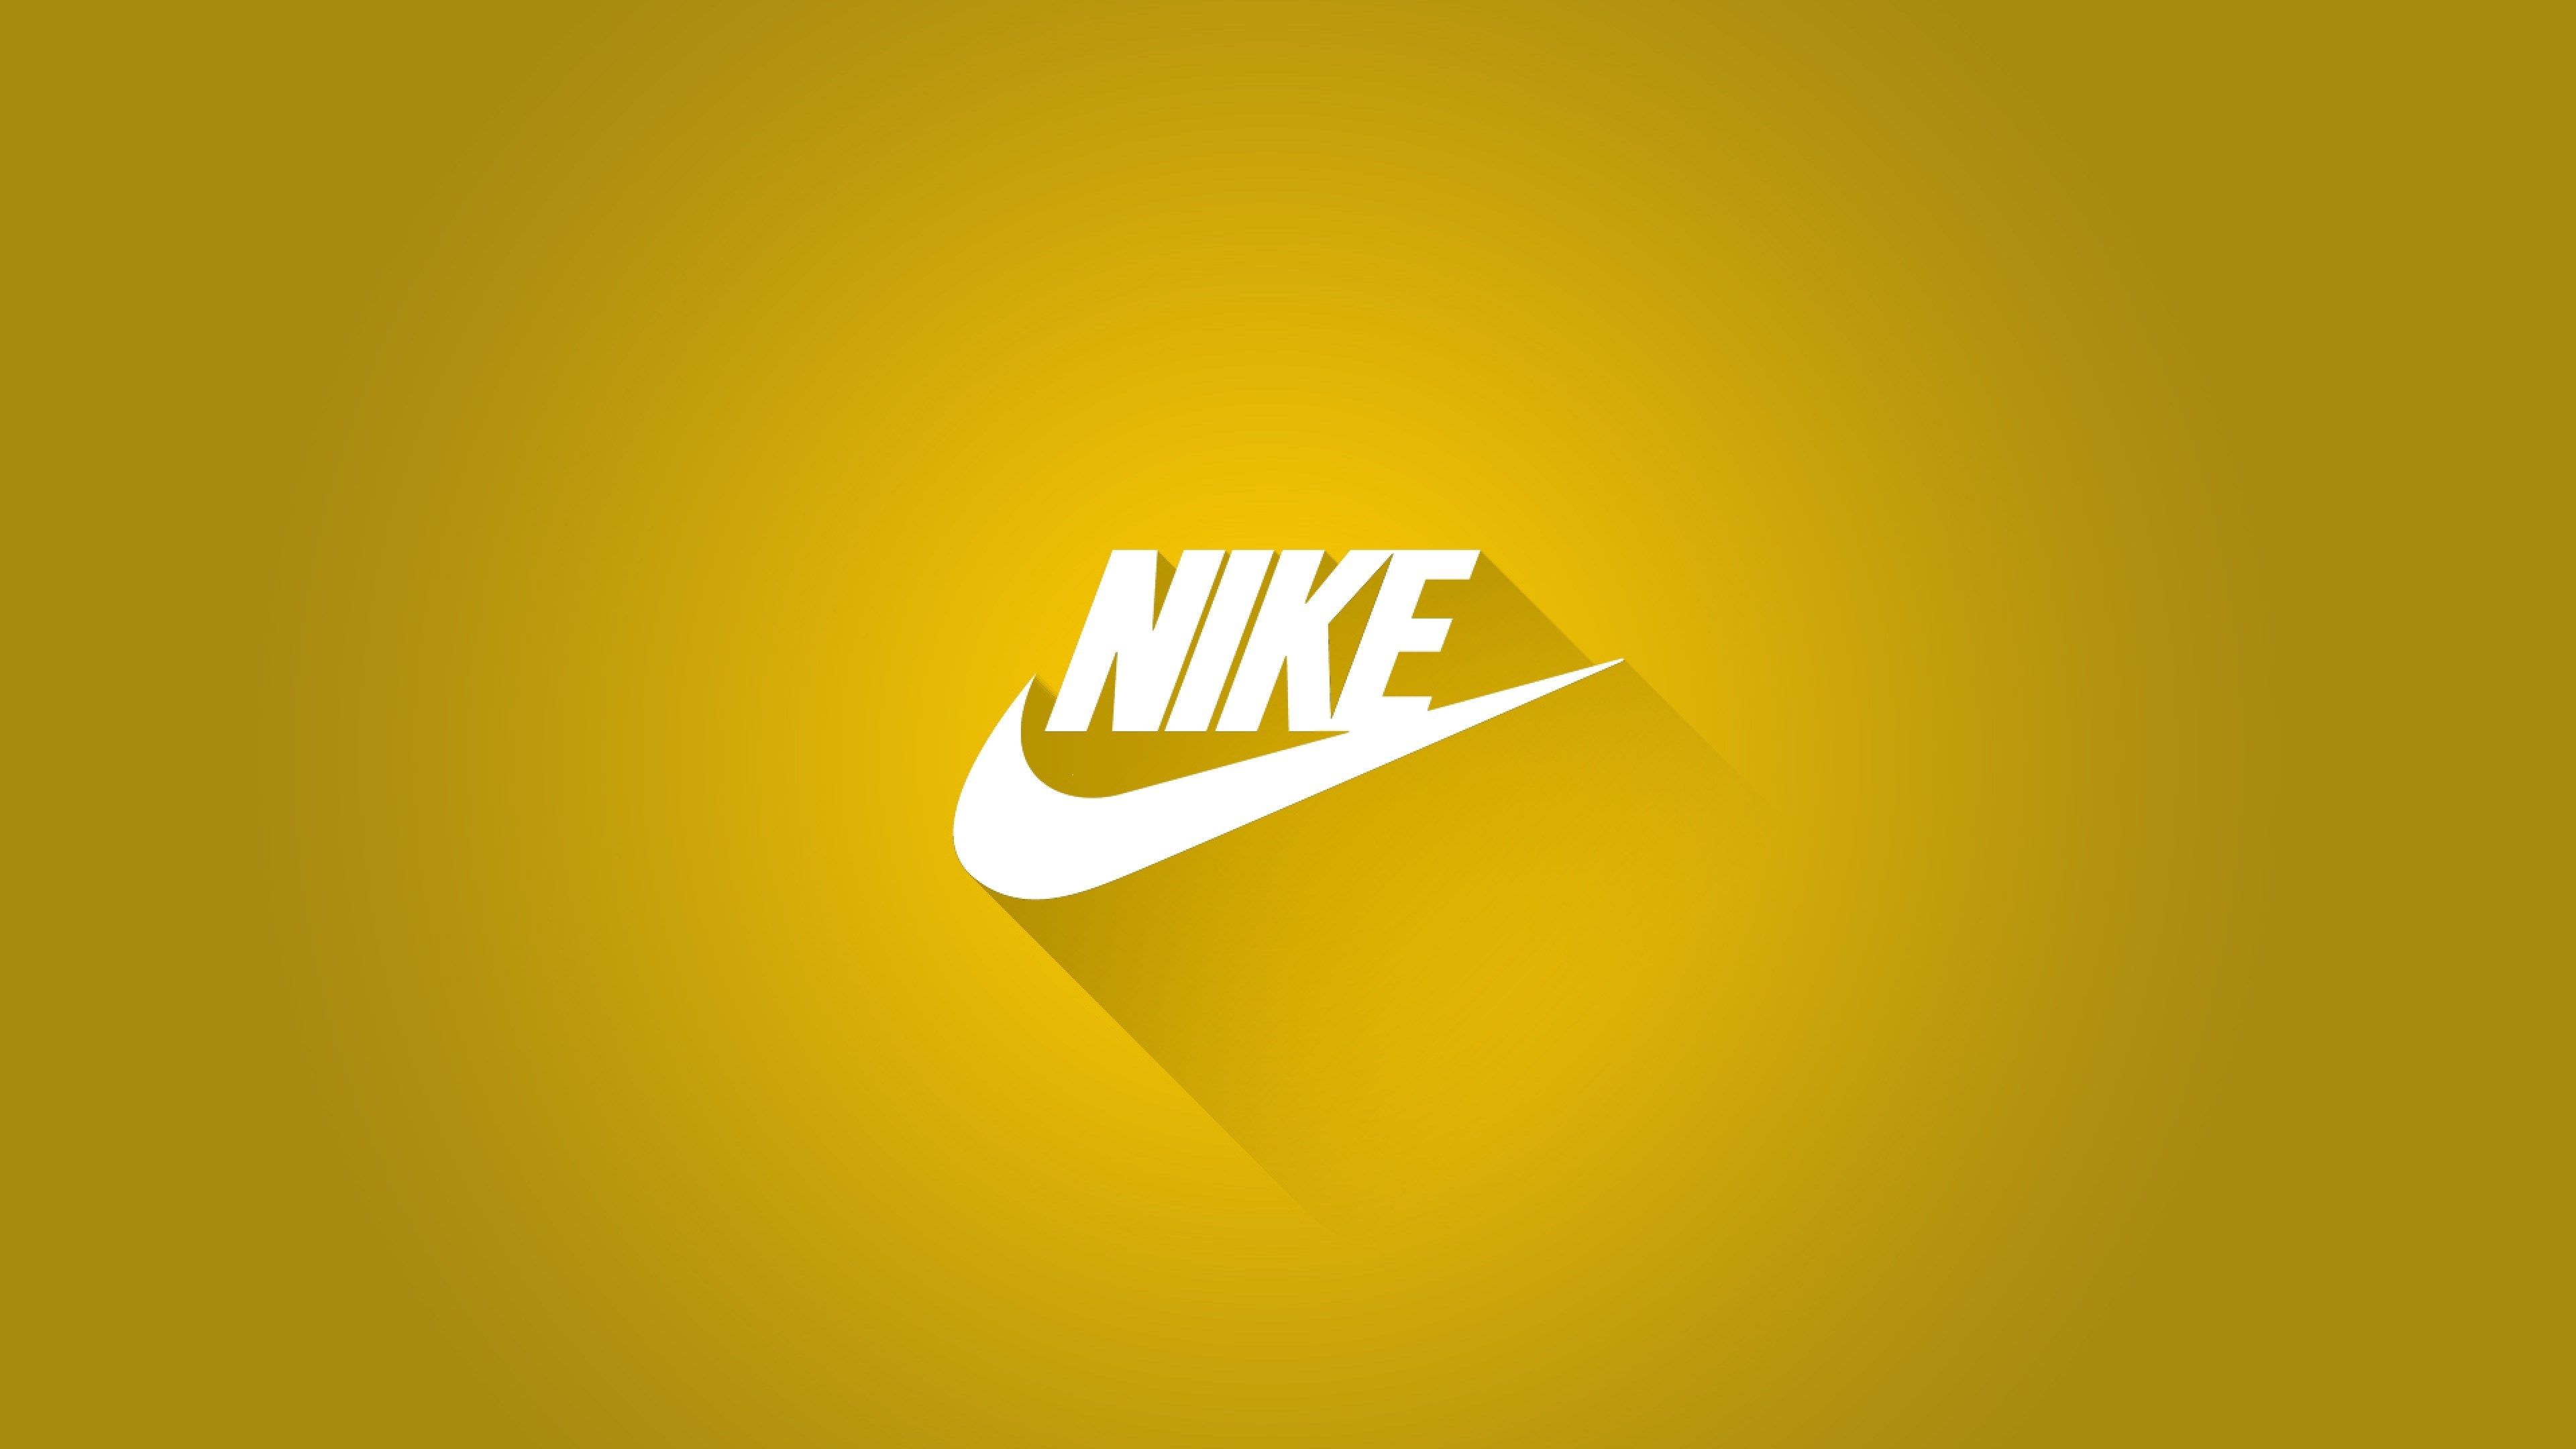 Tareas del hogar bomba rigidez 33+] Nike 4k Wallpapers - WallpaperSafari